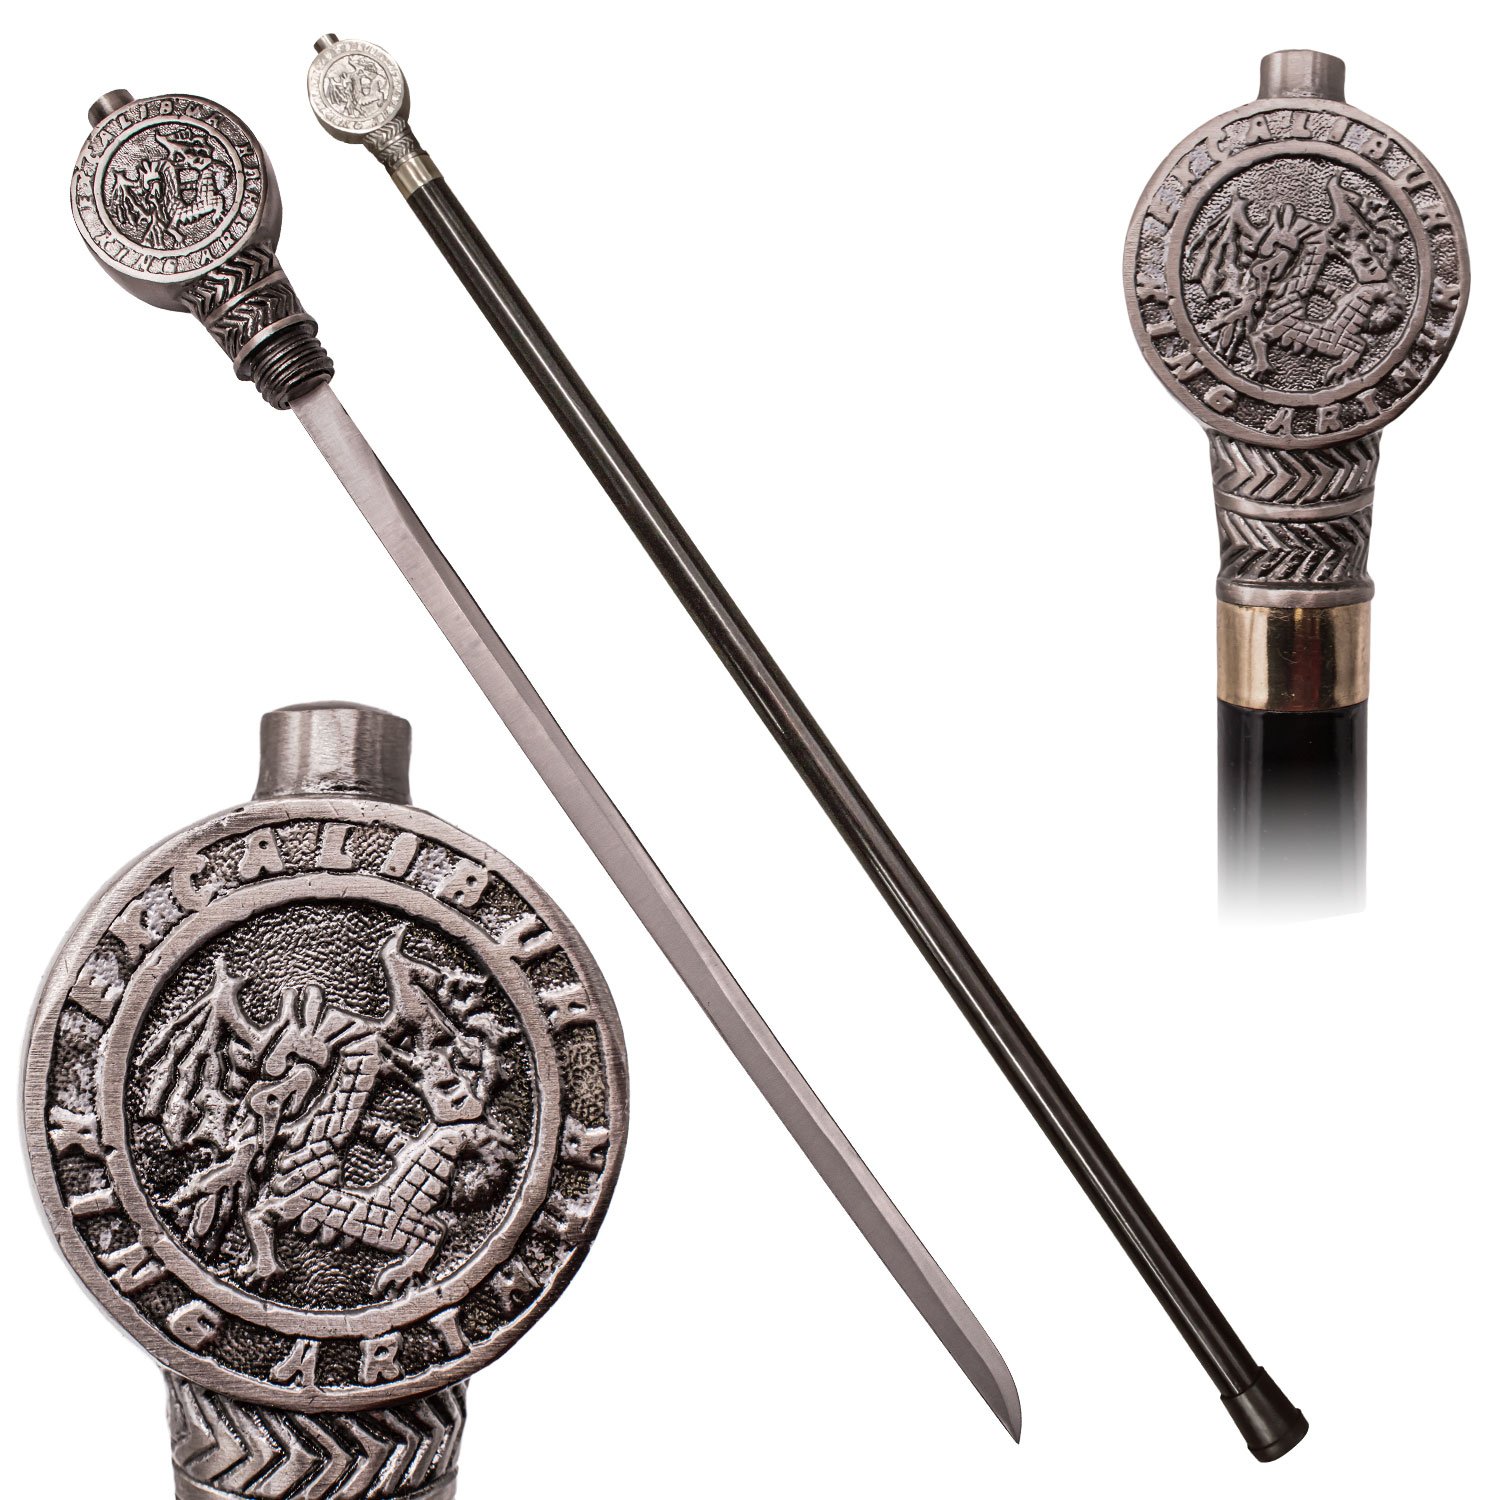 King Arthur Excalibur Antique Walking Cane Stick Hidden Sword